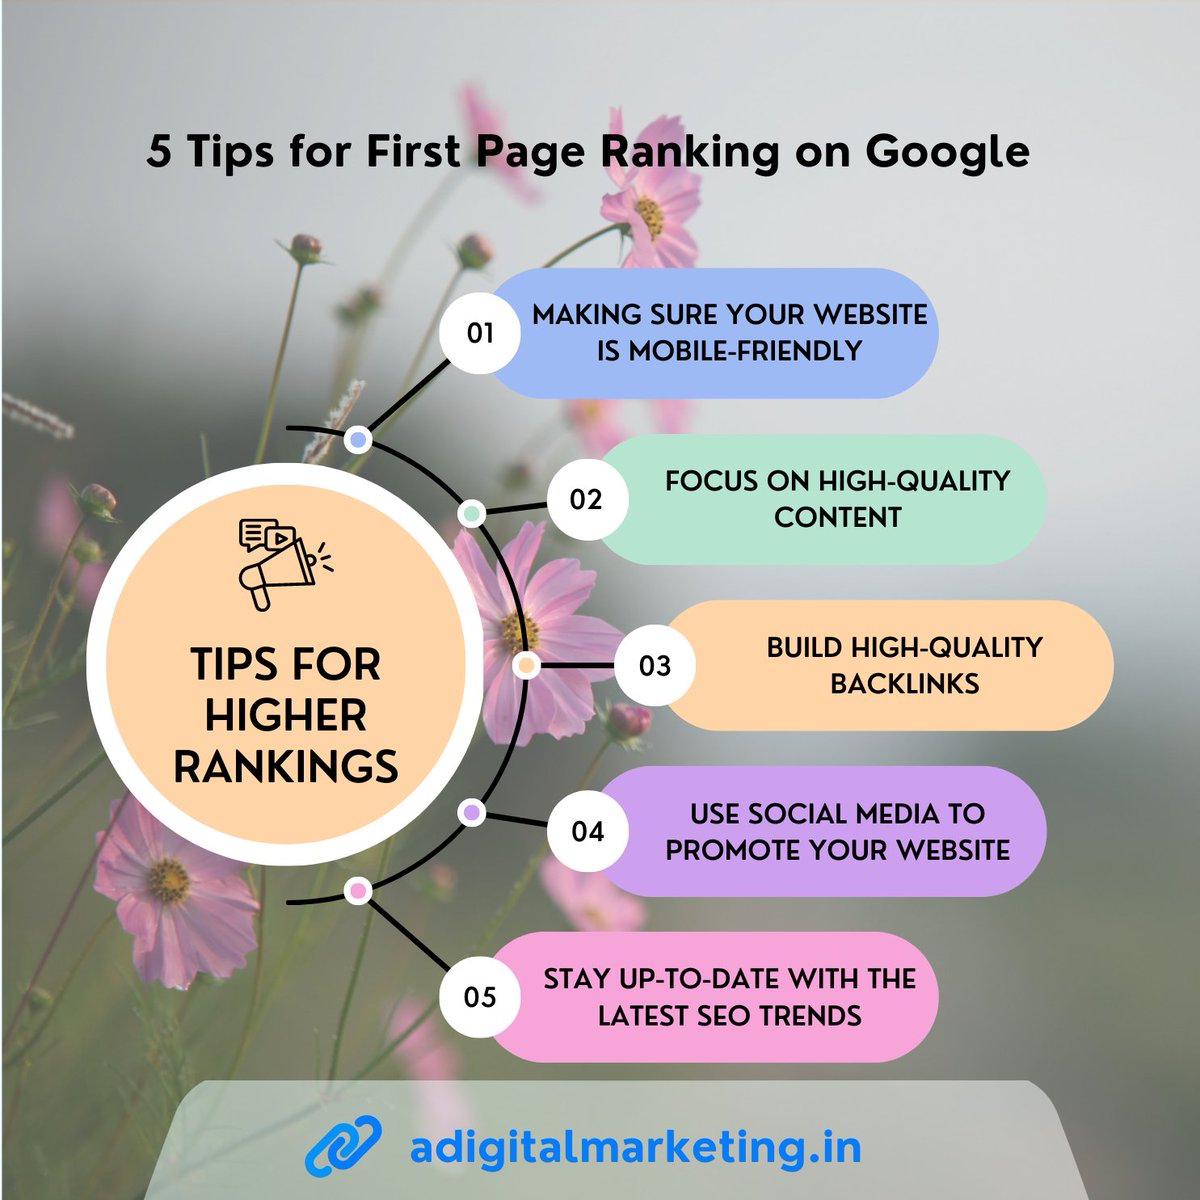 Unlock the secrets to #Google's first page: 5 expert tips from #AdvaitaDigitalMarketing for Higher Rankings

#seotips #seotipsandtricks #bestdigitalmarketingagency #bestdigitalmarketingagencyinKochi #bestdigitalmarketingagencyinhyderabad